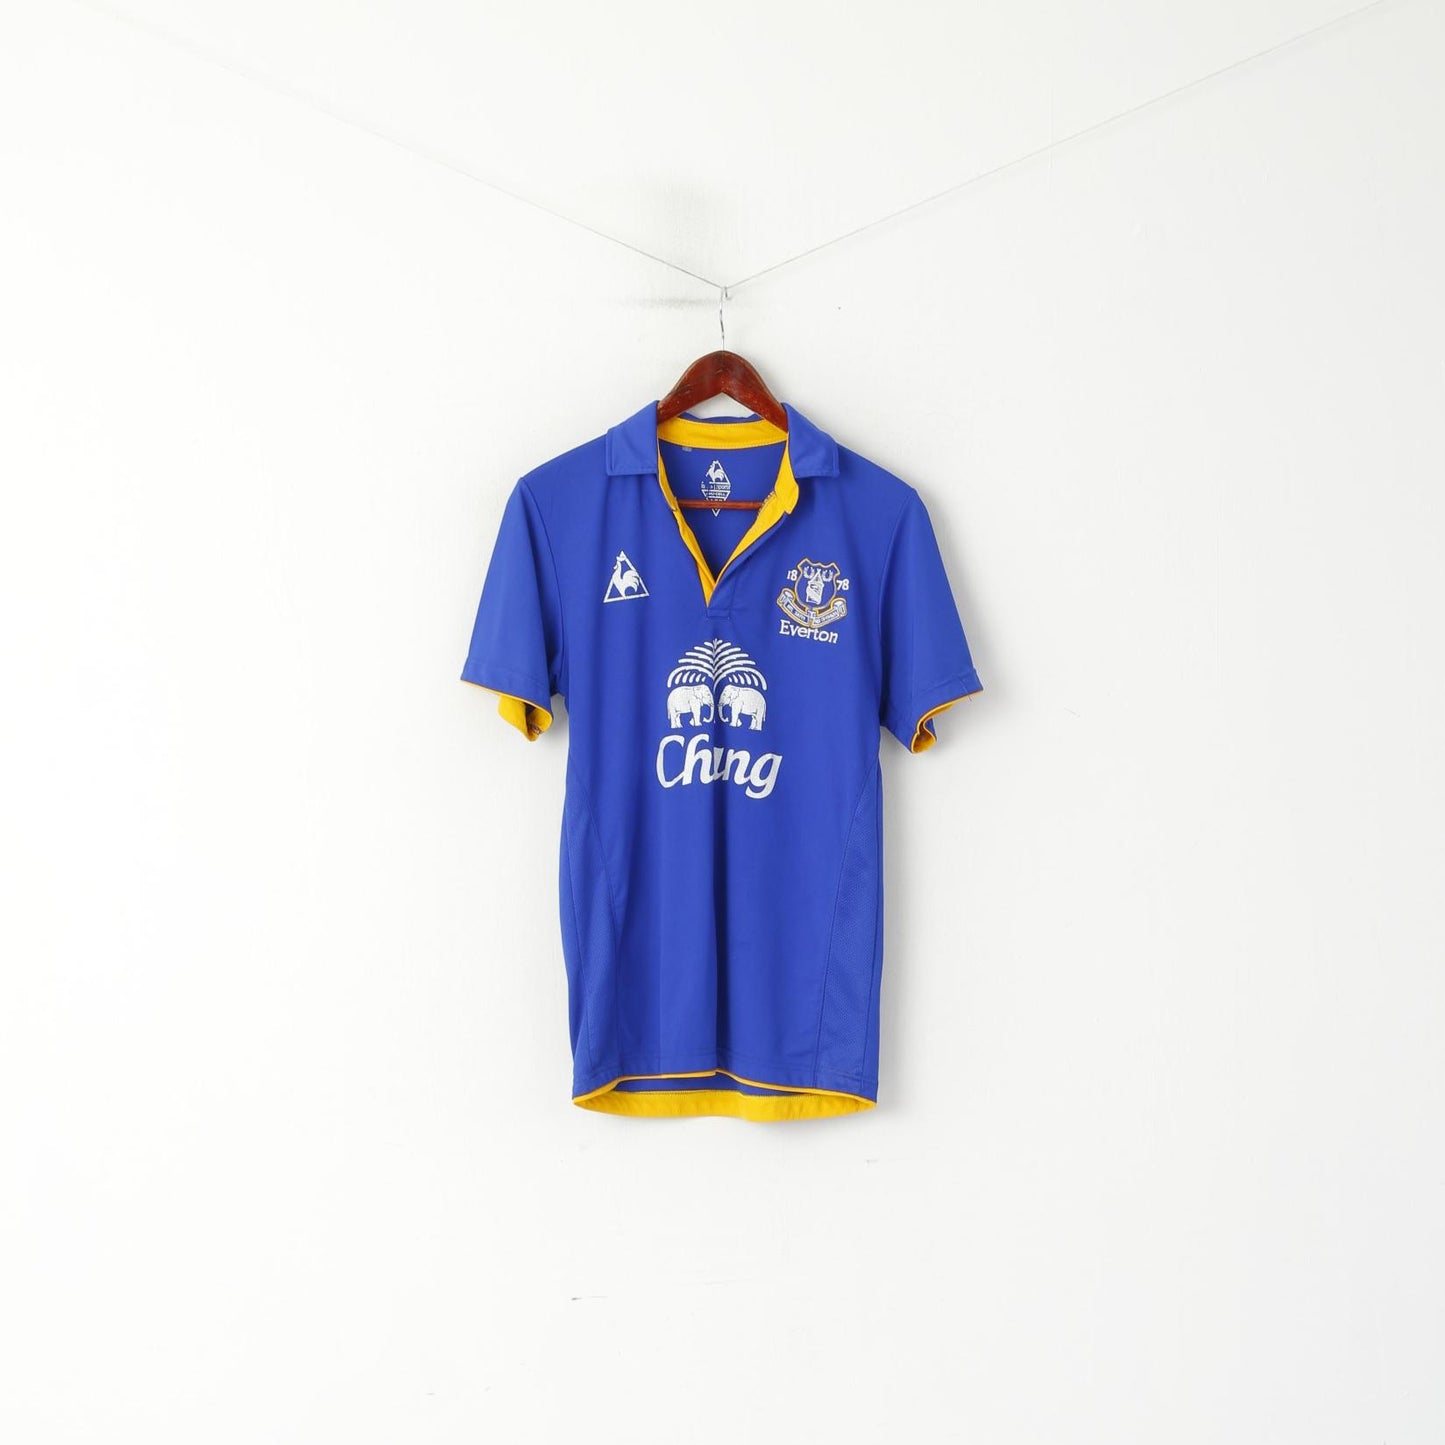 Le Coq Sportif Men S Shirt Blue Everton Football Club Sport Jersey Polo Top